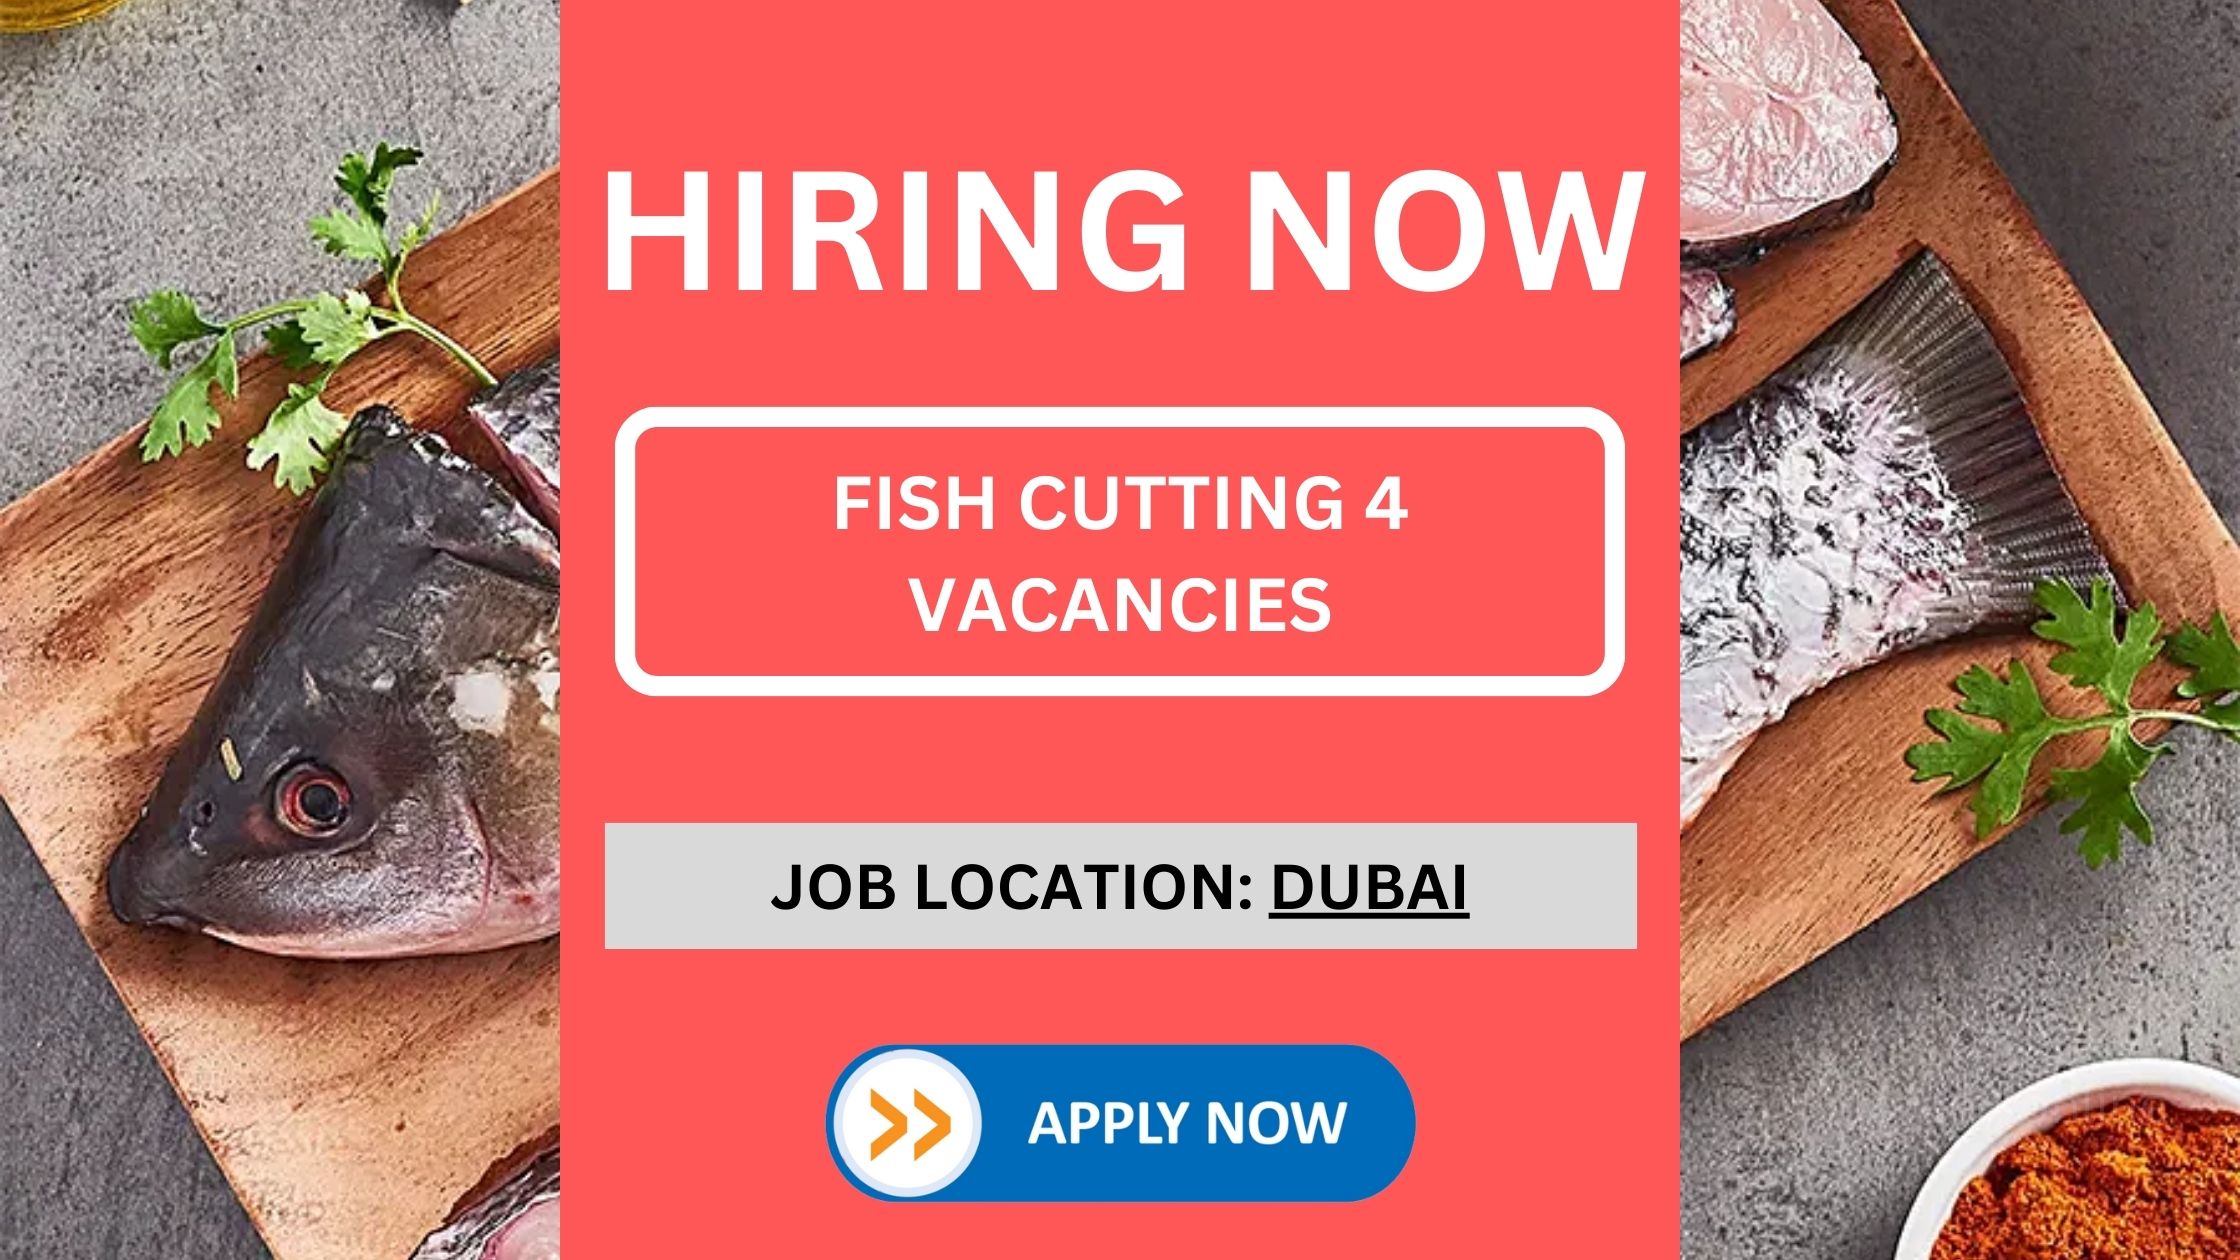 Seafood Shop Vacancy: Fish Cutting 4 Vacancies Available